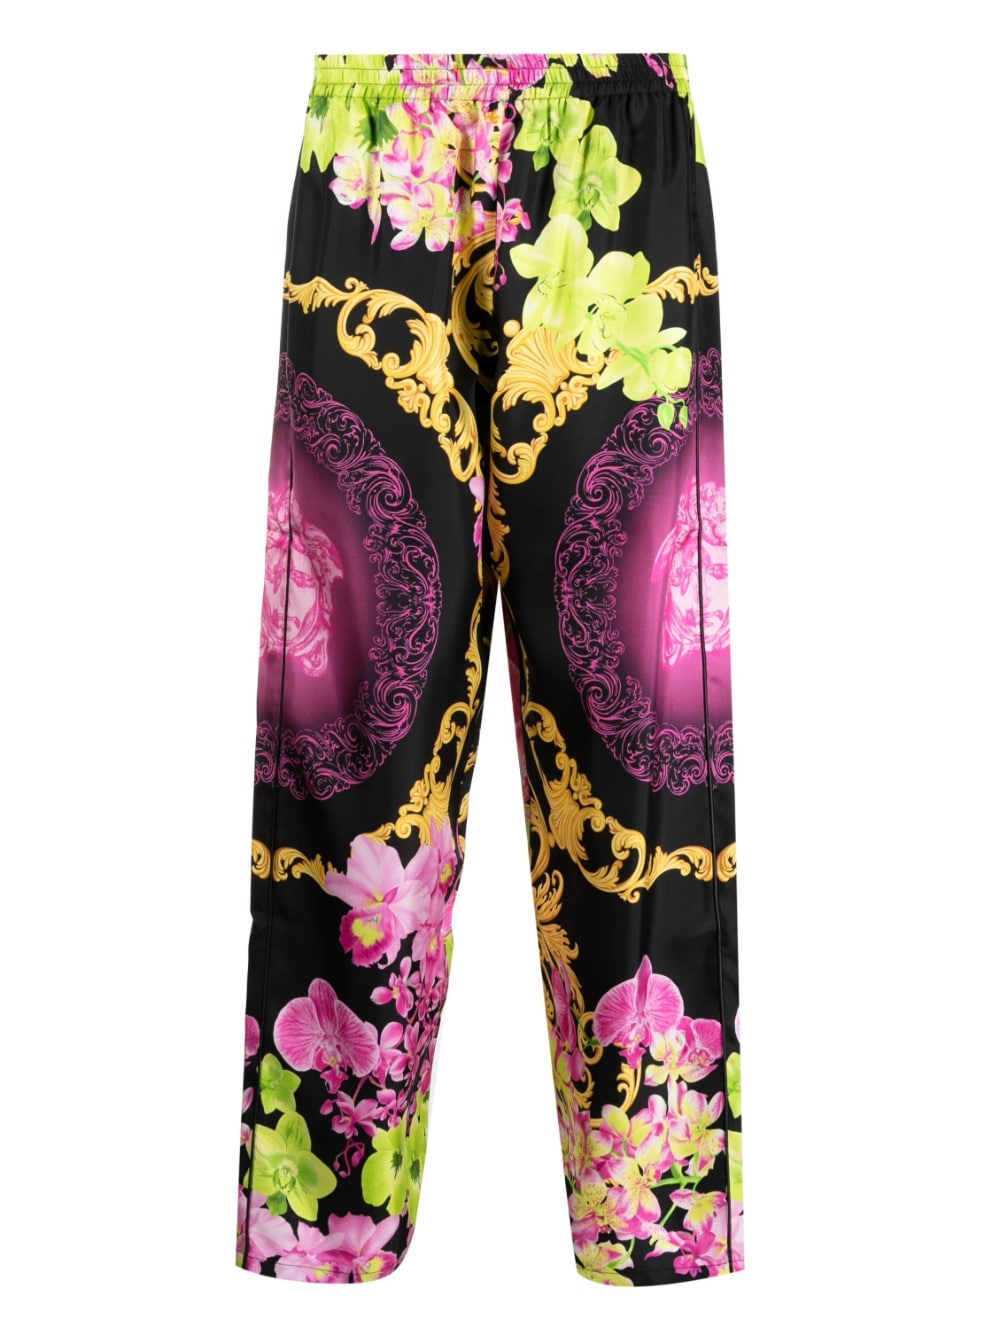 Pantalone mare in seta stampa floreale